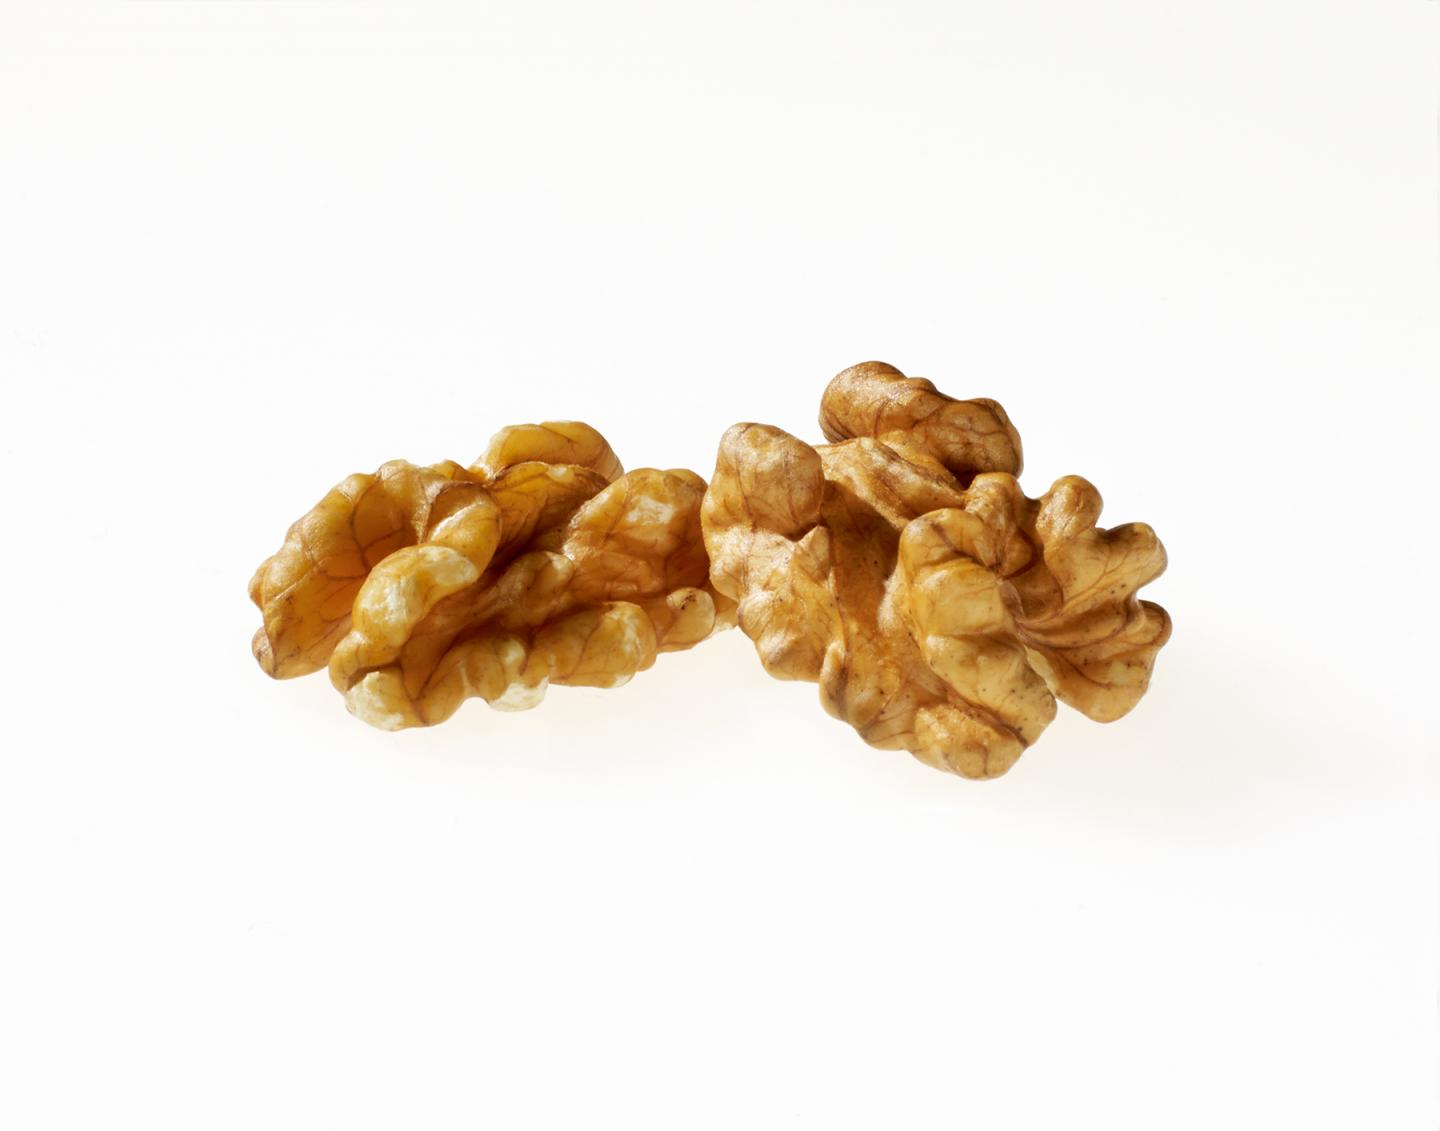 walnut gut microbiome